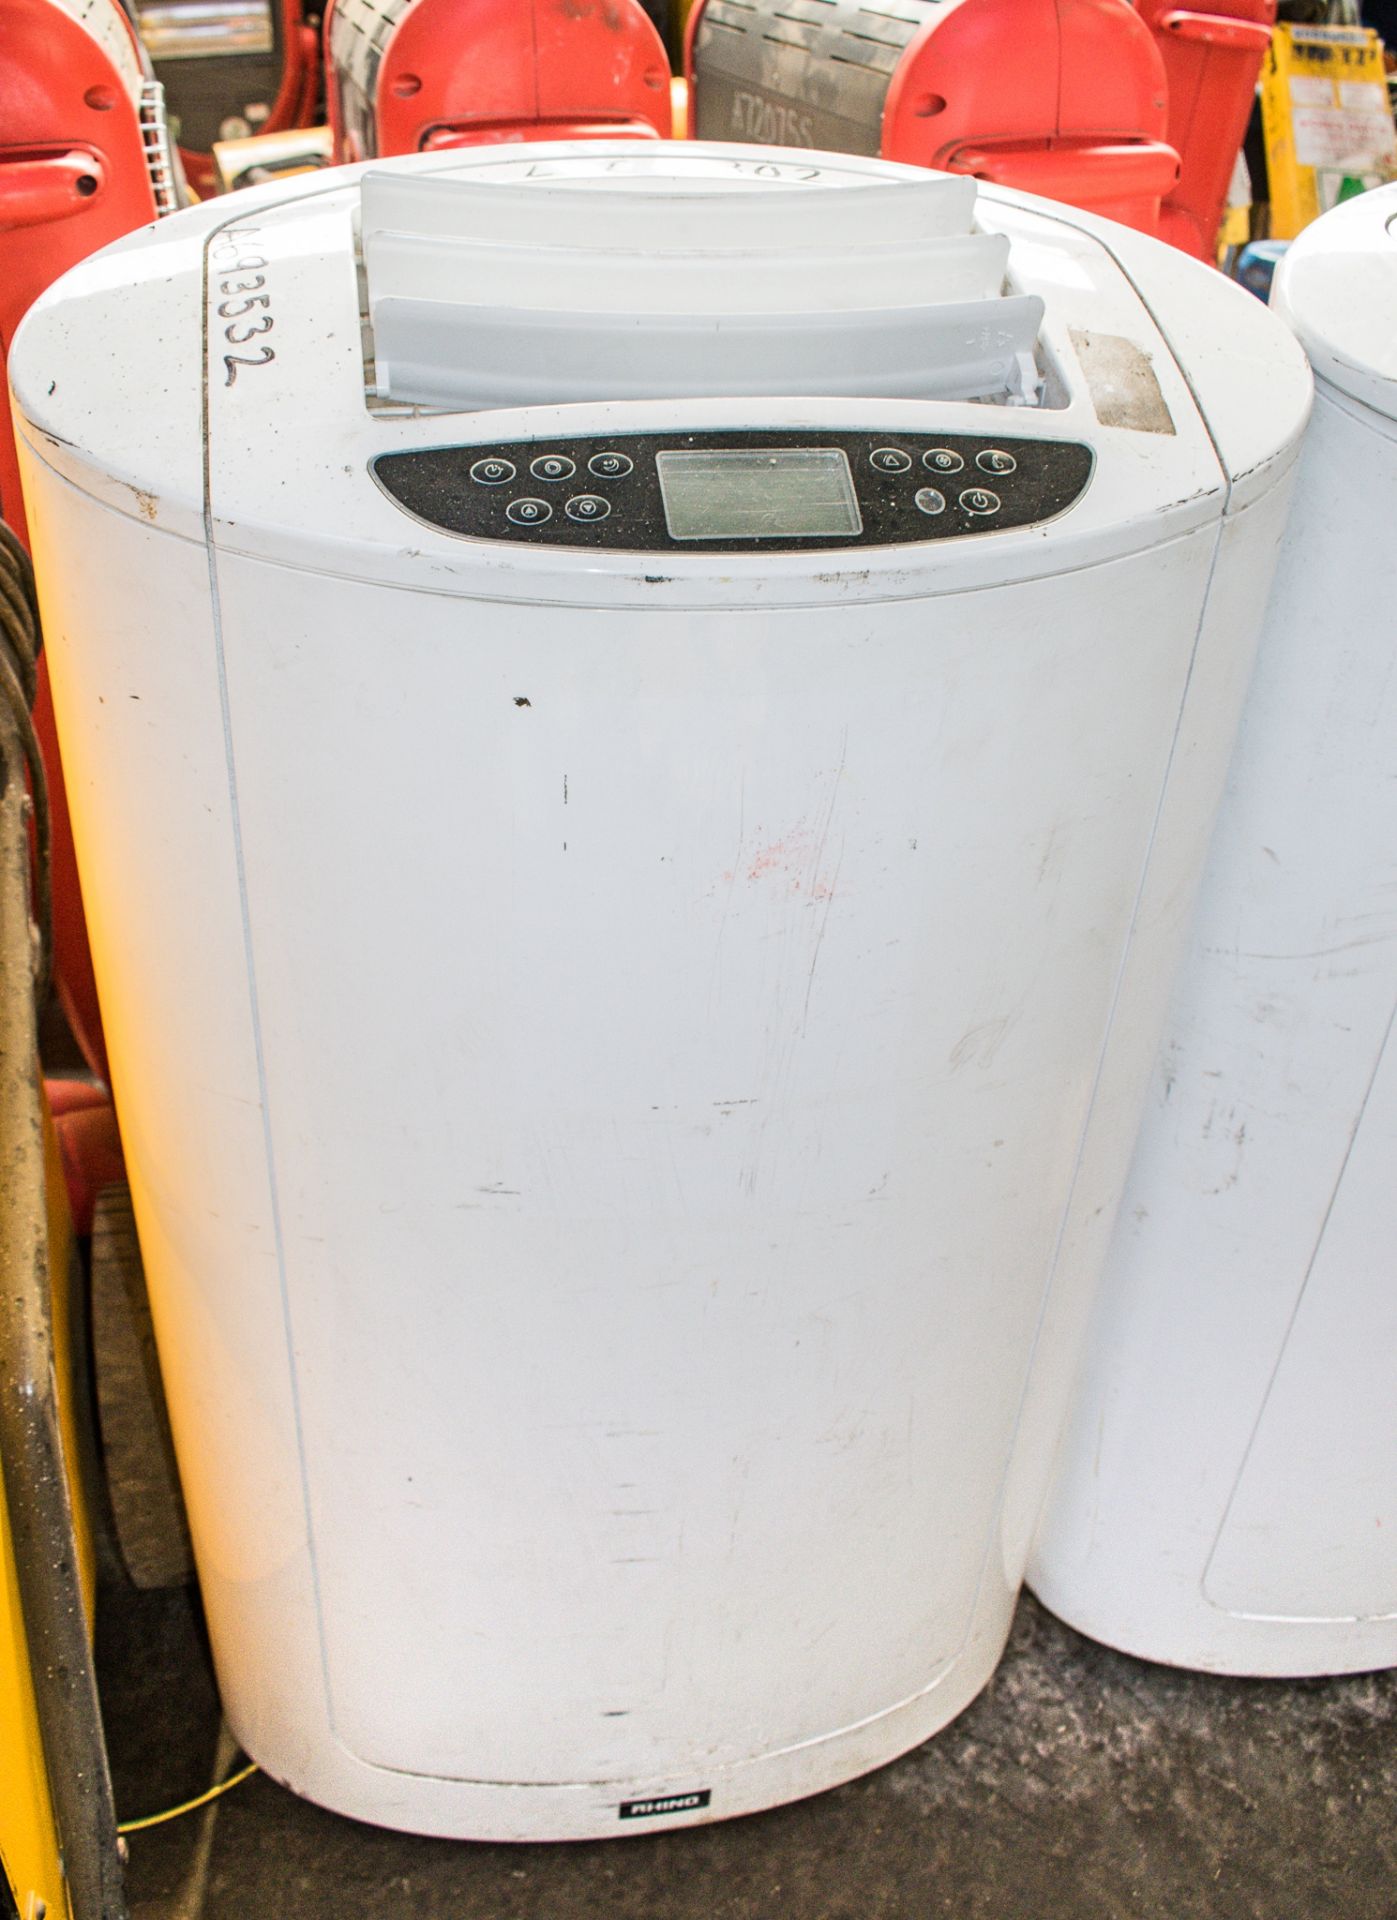 Rhino 240v air conditioning unit A693532